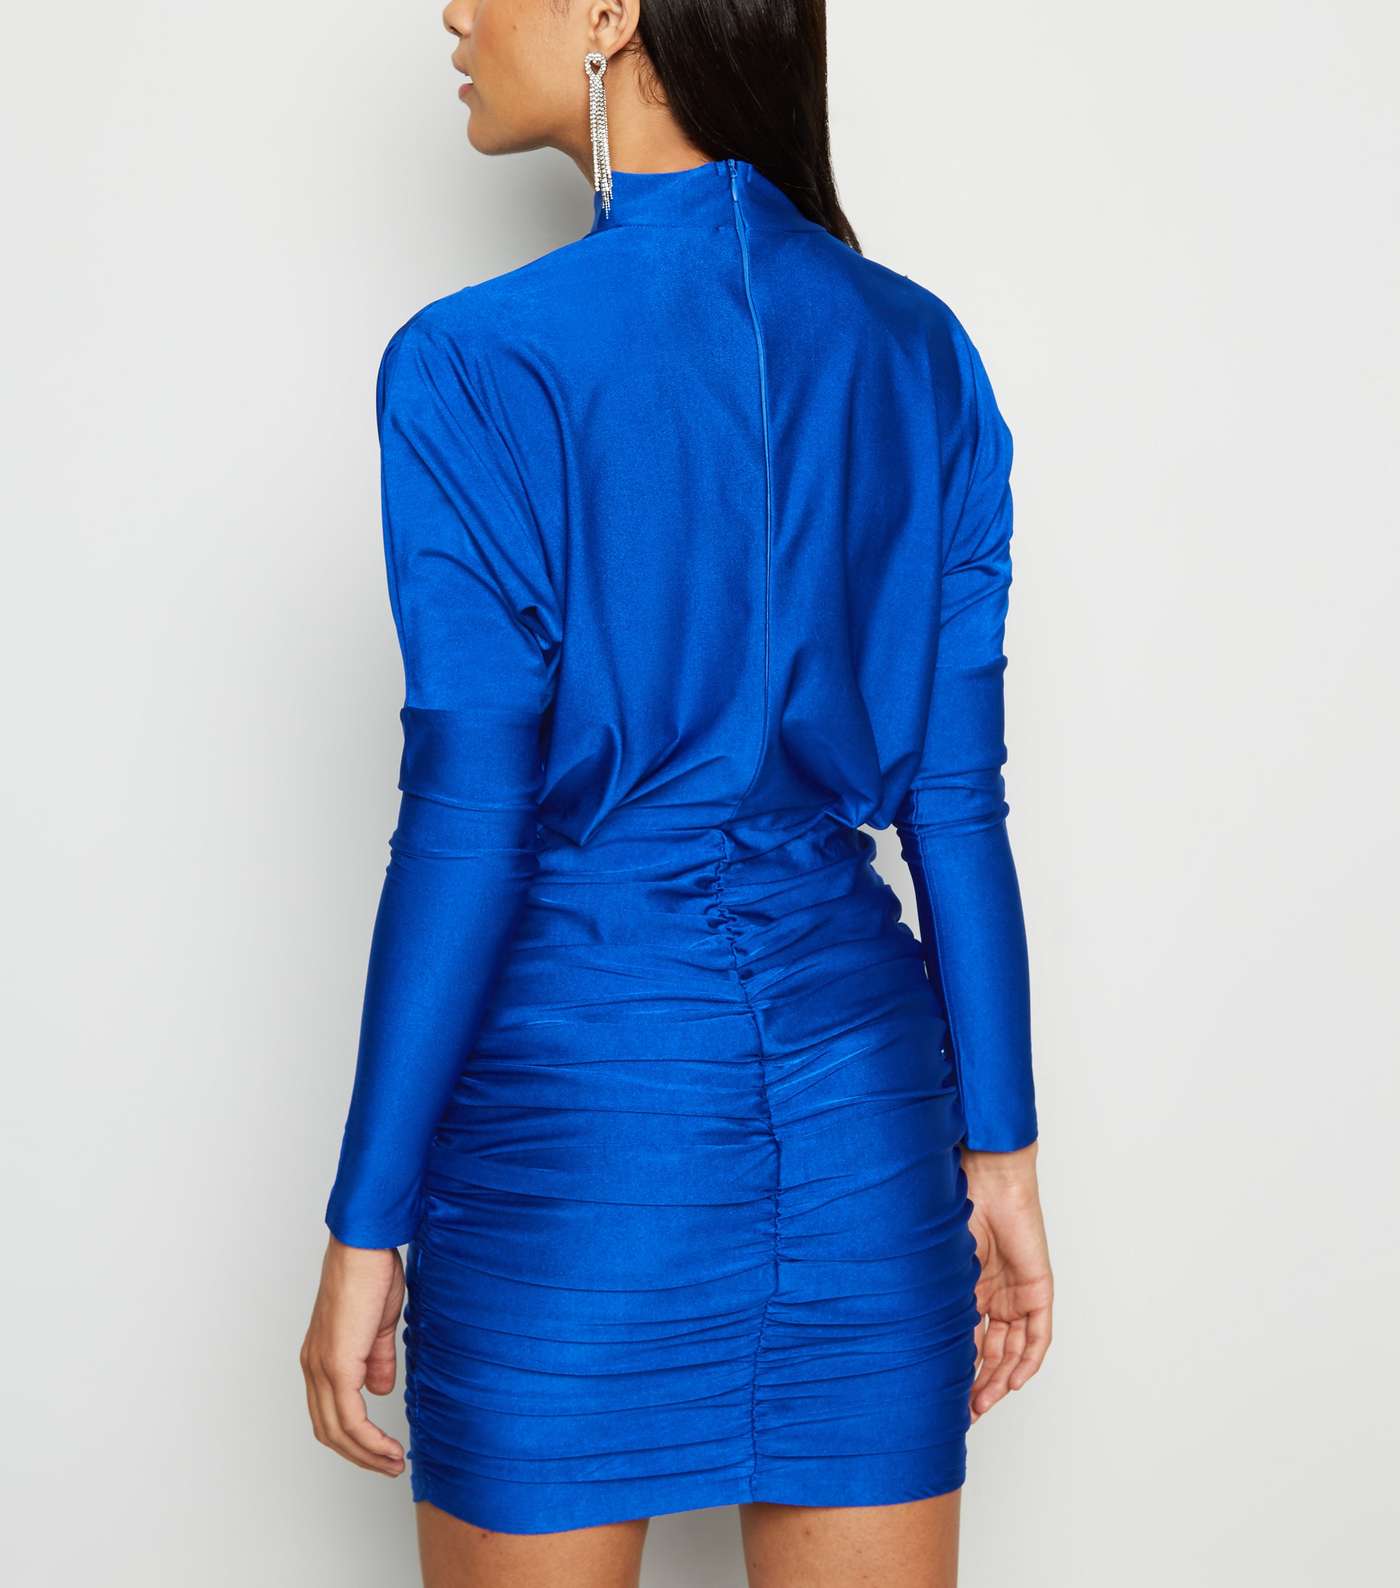 AX Paris Bright Blue Ruched High Neck Dress Image 5